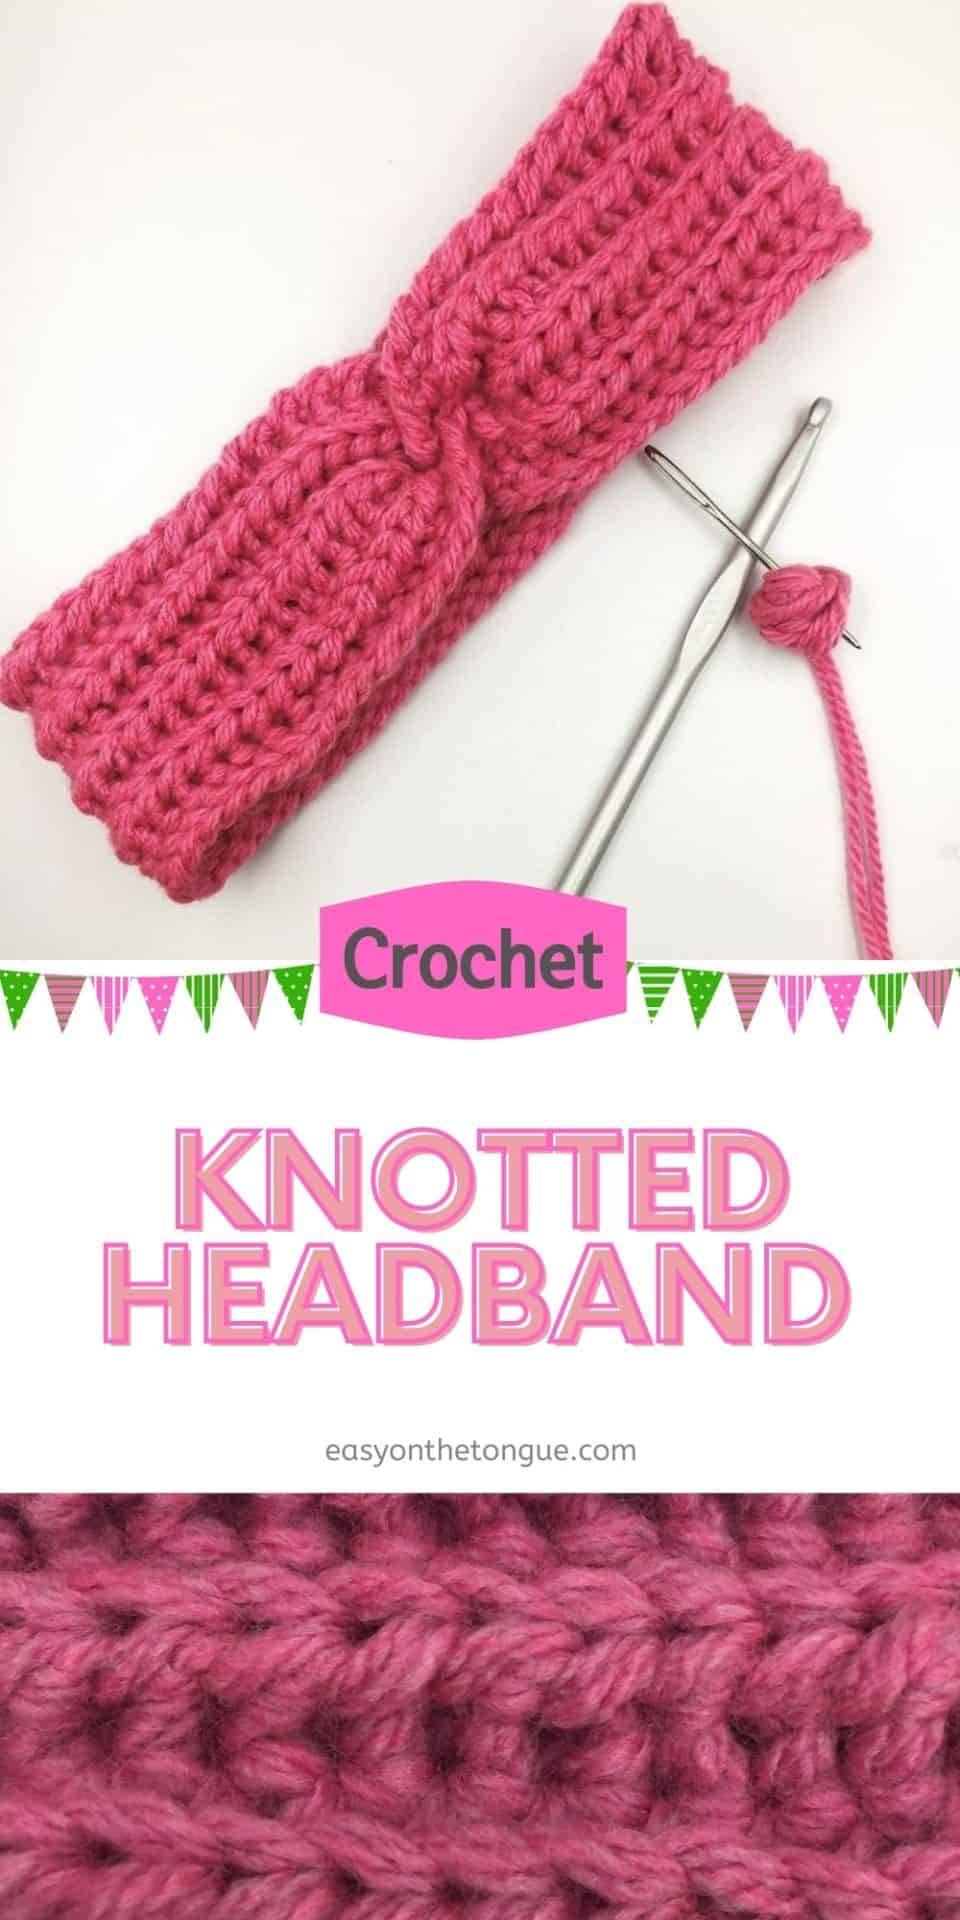 Knotted Headband Crochet Pattern available free on easyonthetongue.com 1 Knotted Crochet Headband, Free Pattern